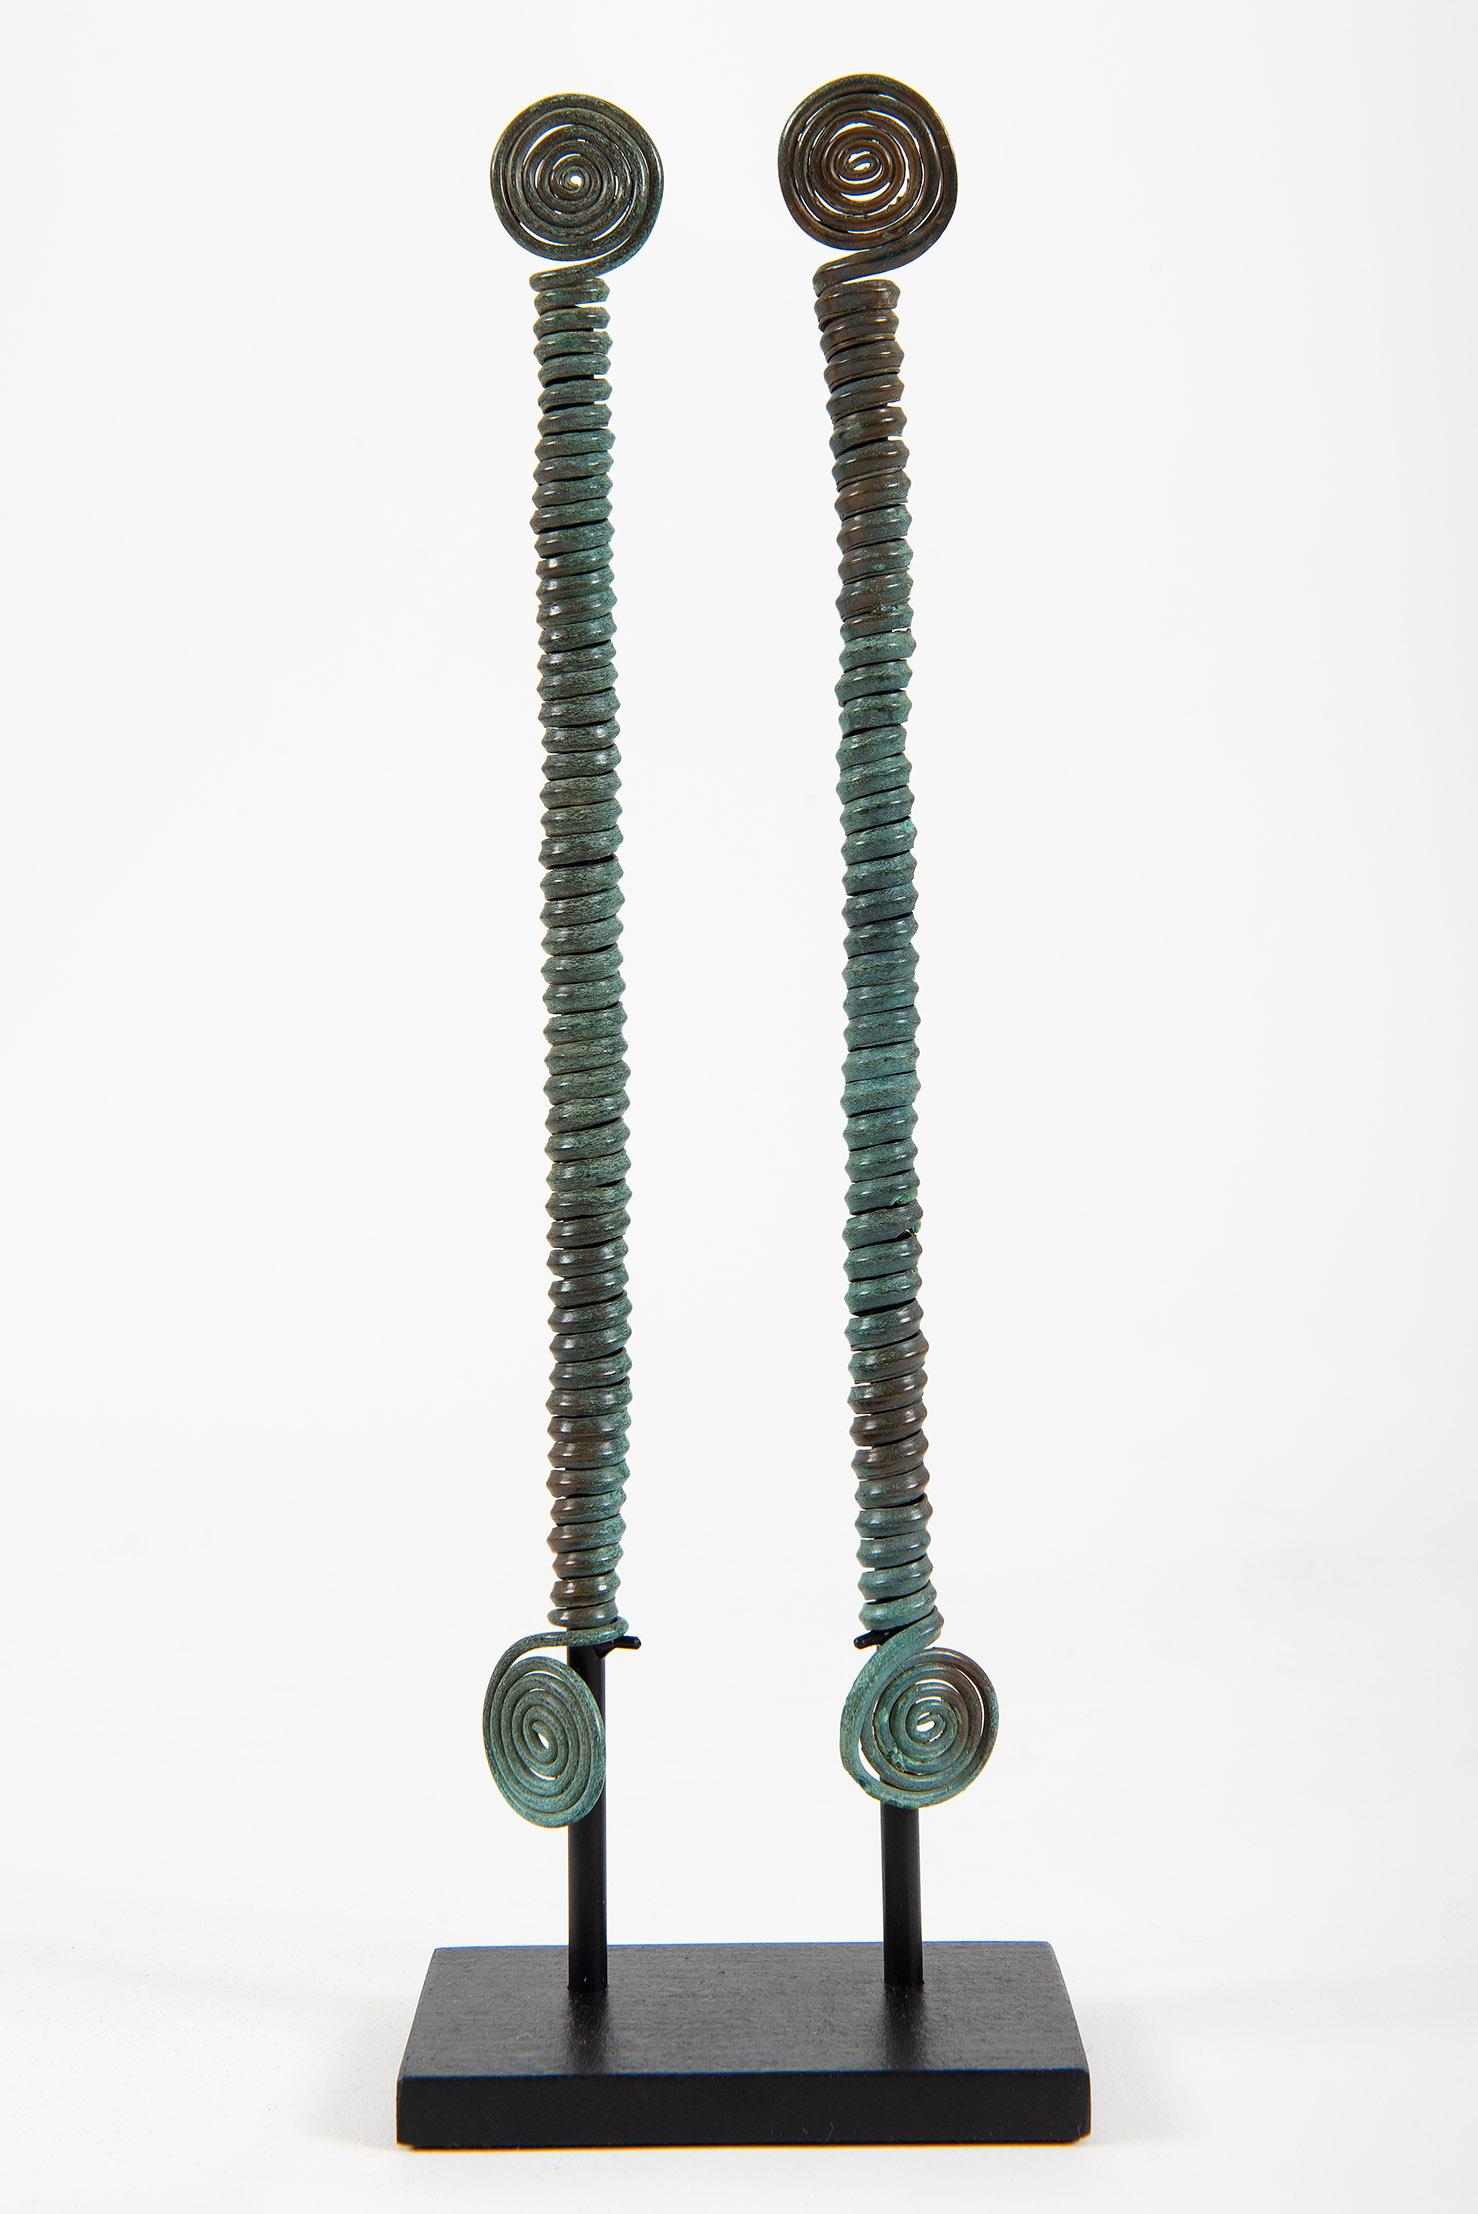 Two spiral pins fibula, Hallstatt, 1st Iron Age, Bronze, Sculpture, Antiquities